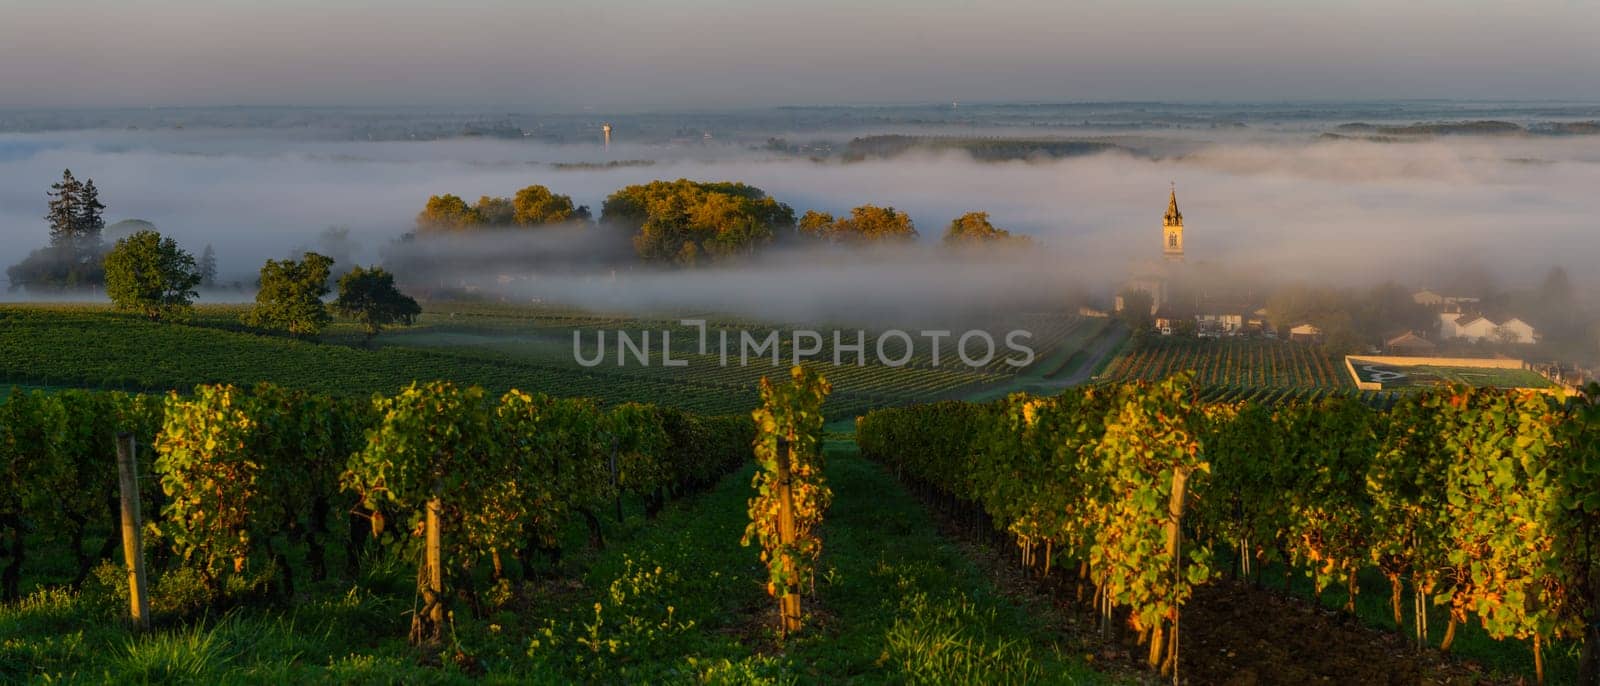 Sunset landscape and smog in bordeaux wineyard, Loupiac, France, Europe, High quality photo